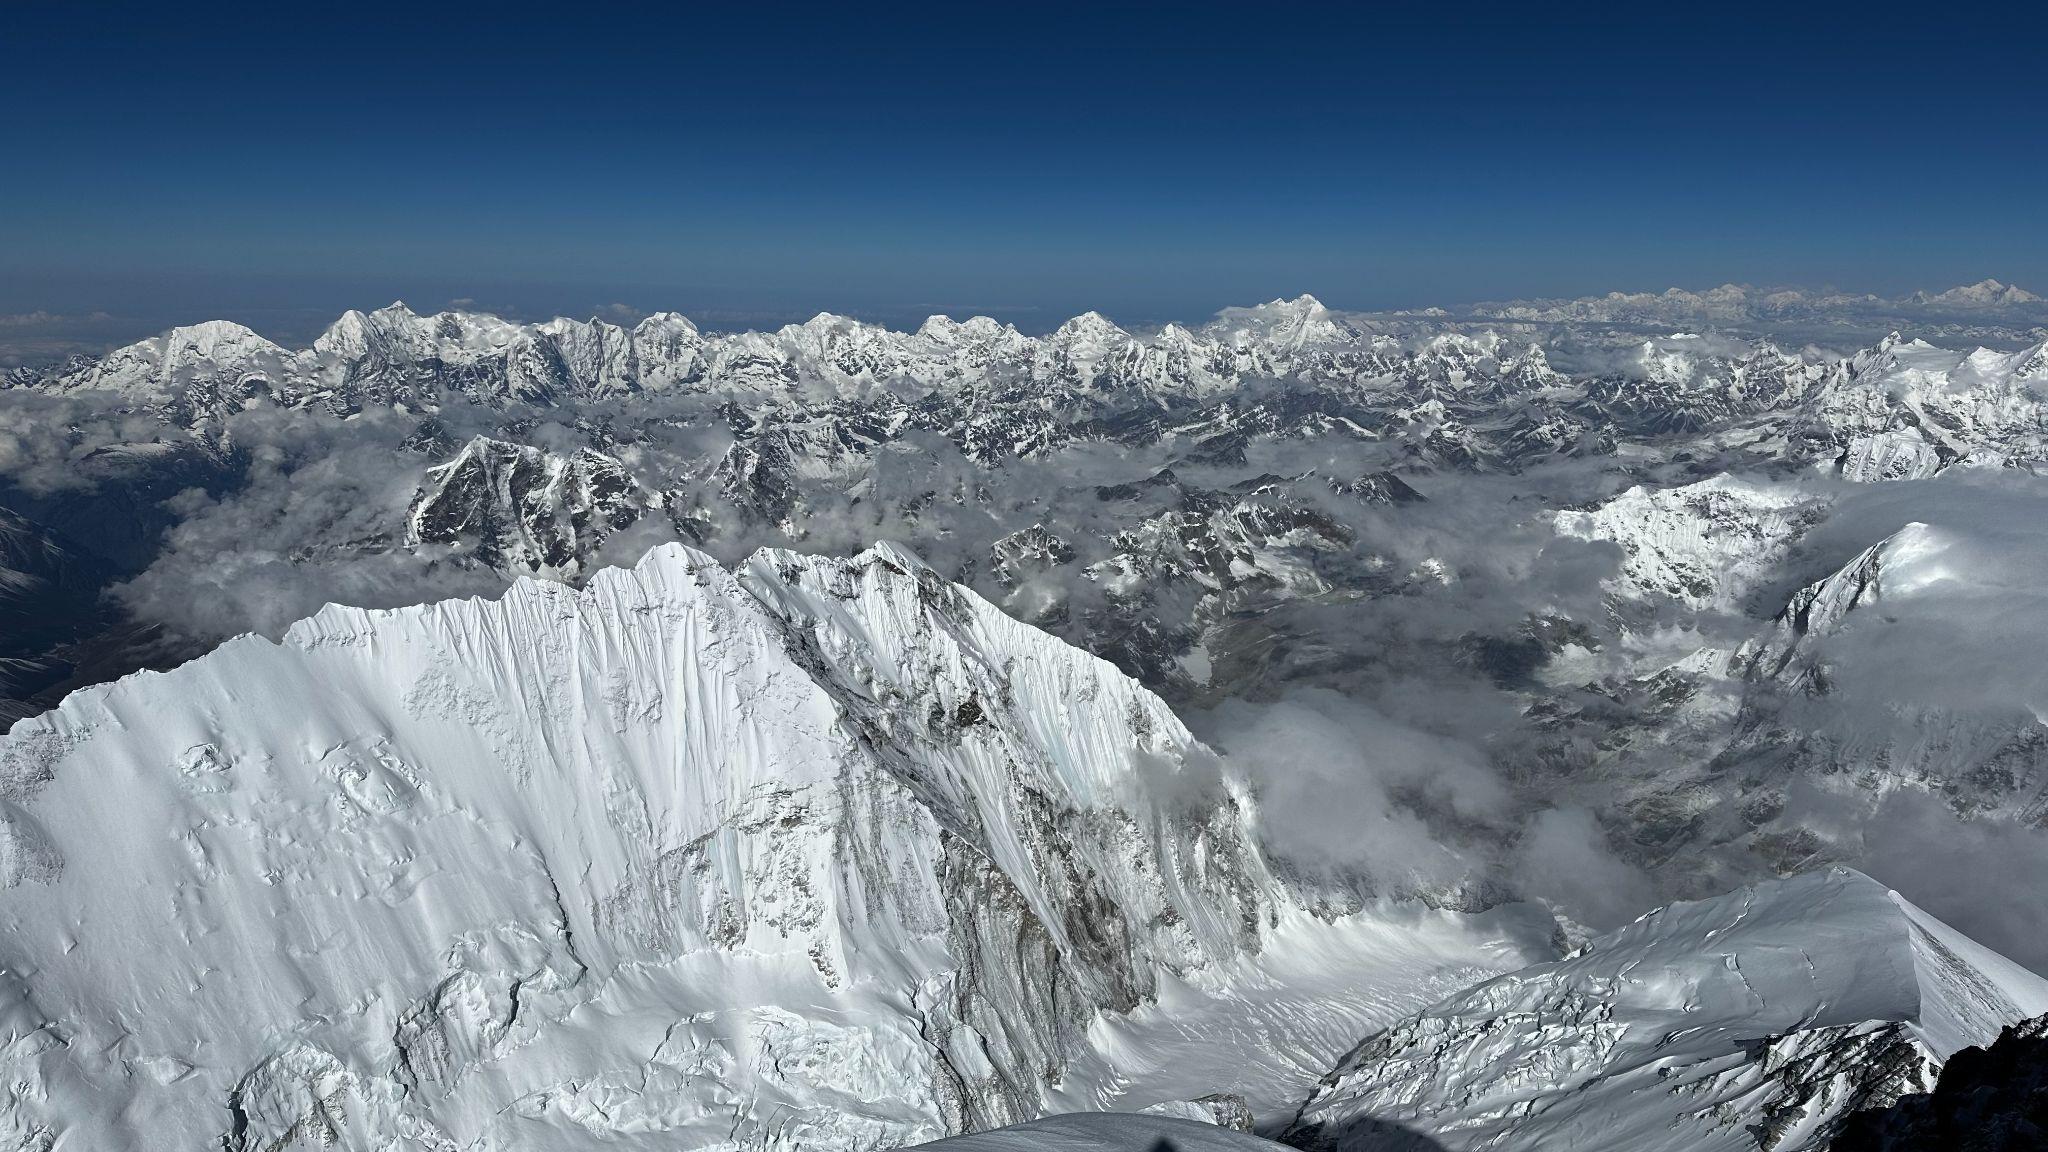 fot. Widok ze szczytu Mount Everest, Nuptse 7885 m.n.p.m oraz panorama Himalajów